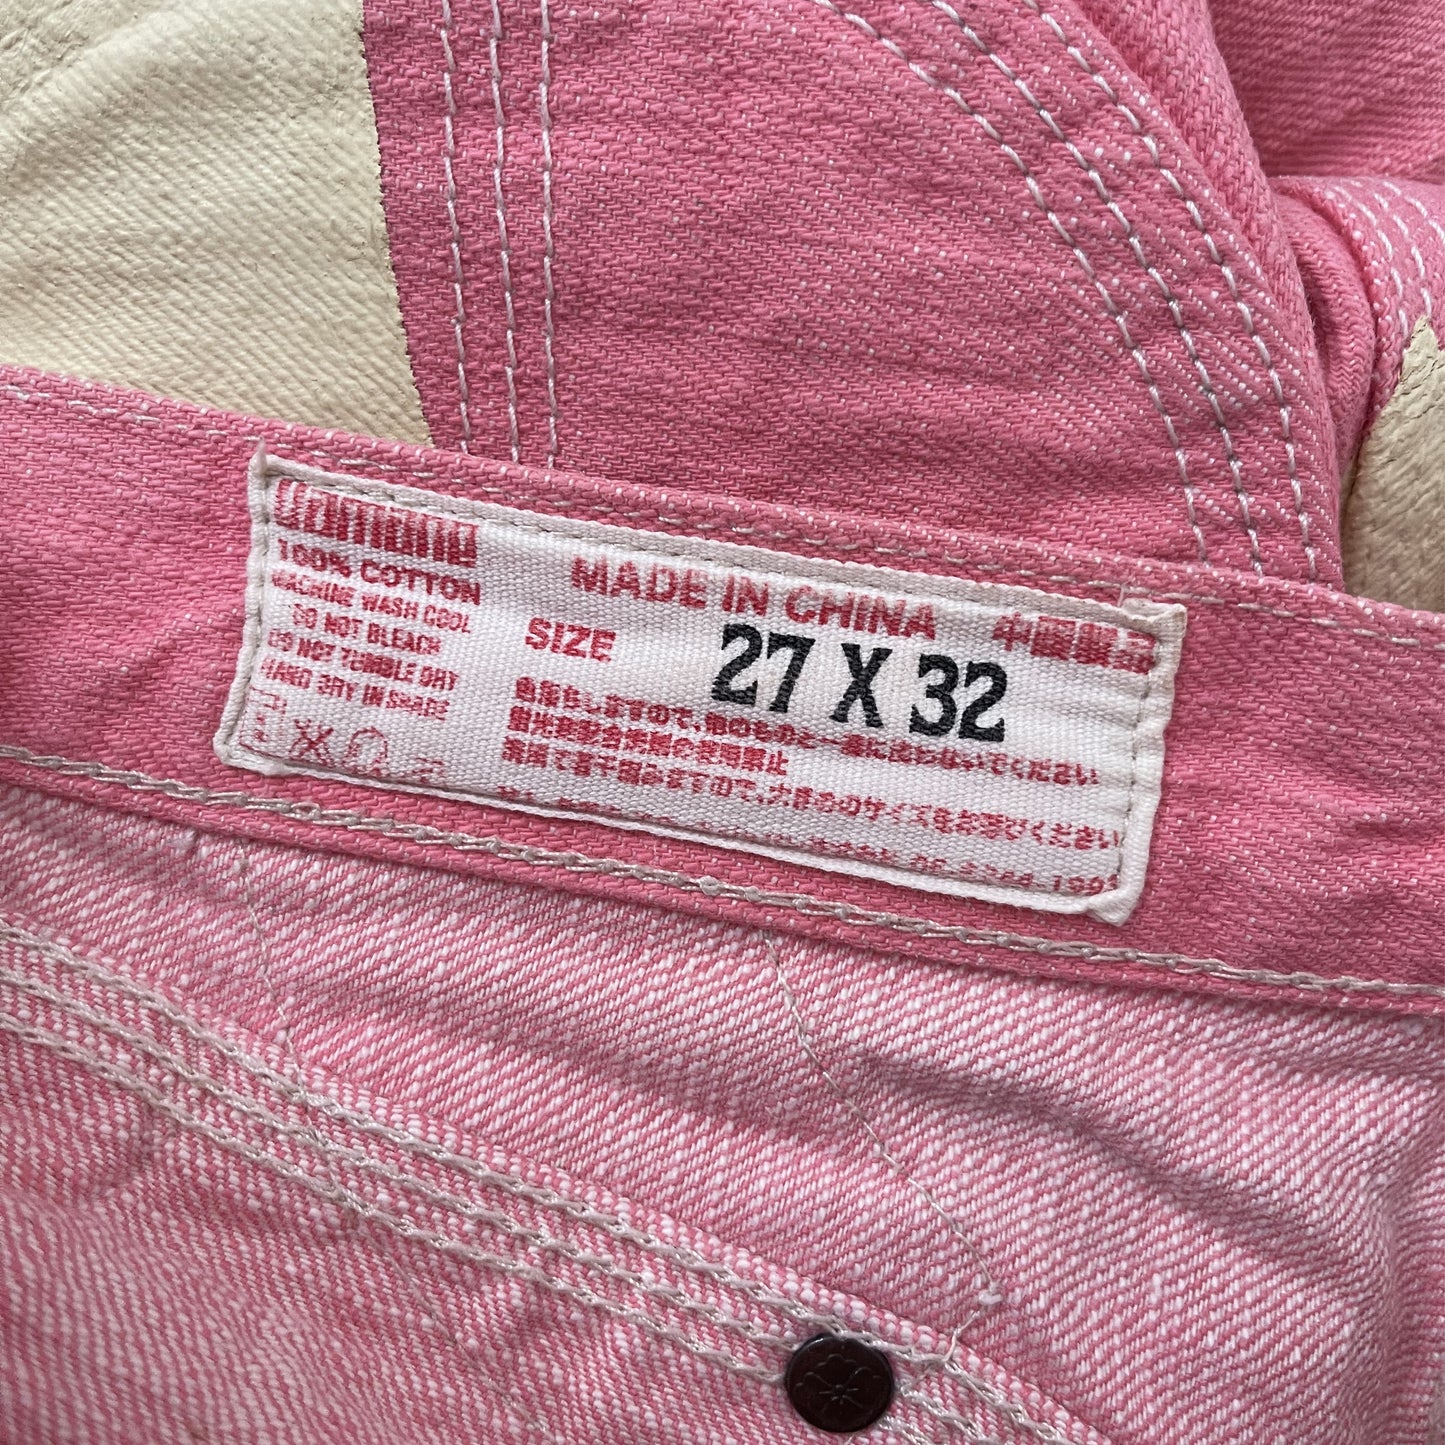 Evisu Daicock Pink Jeans